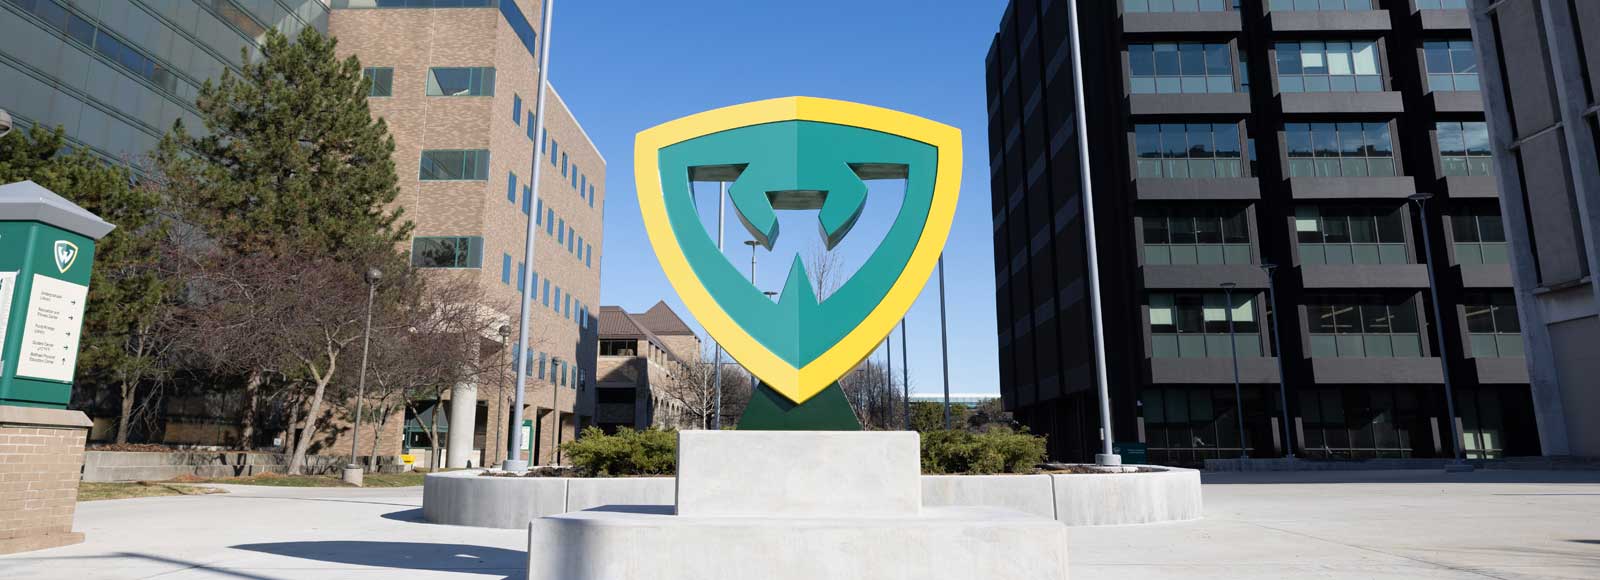 Sculpture of WSU logo